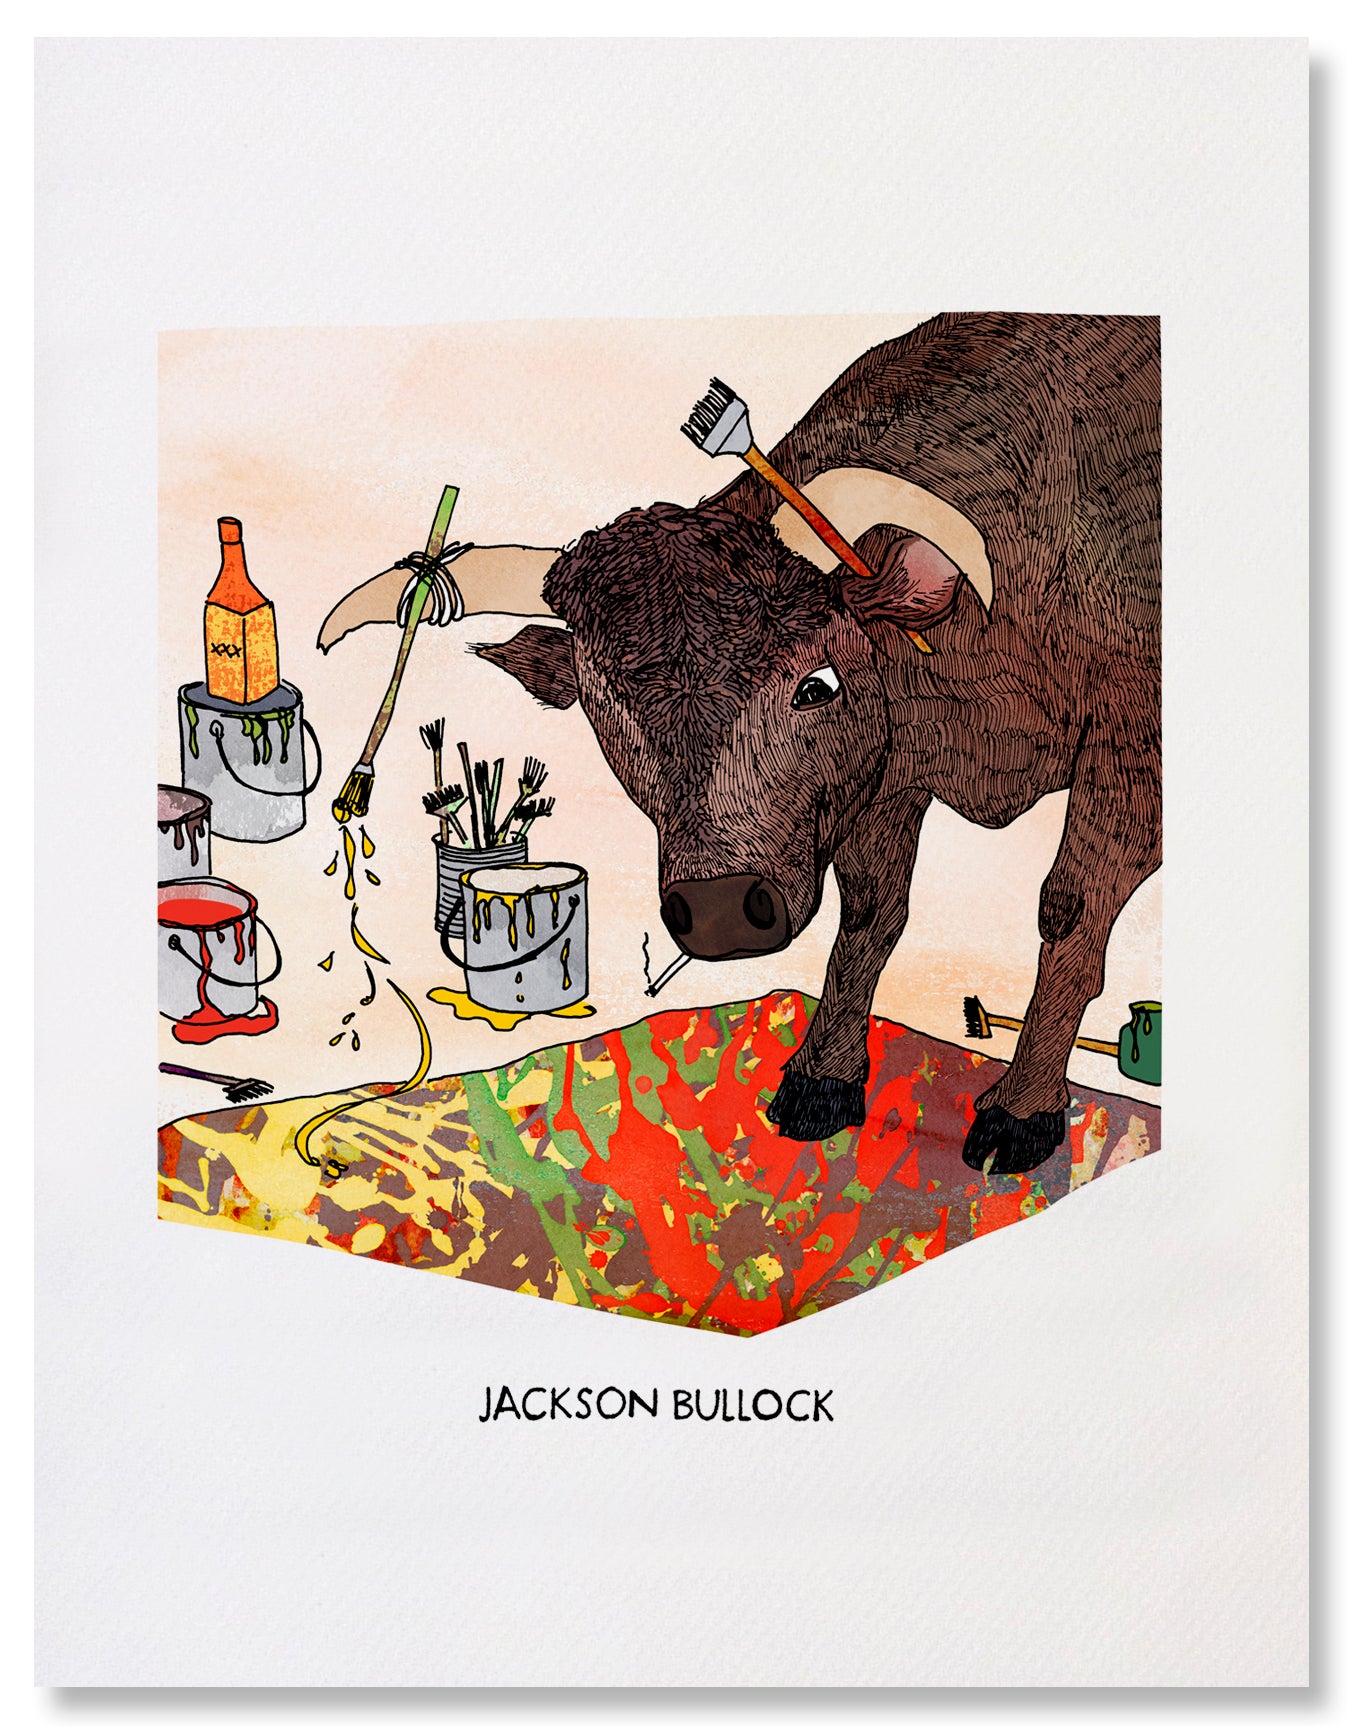 Jackson Bullock - Illustrated Funny Pun Everyday Card